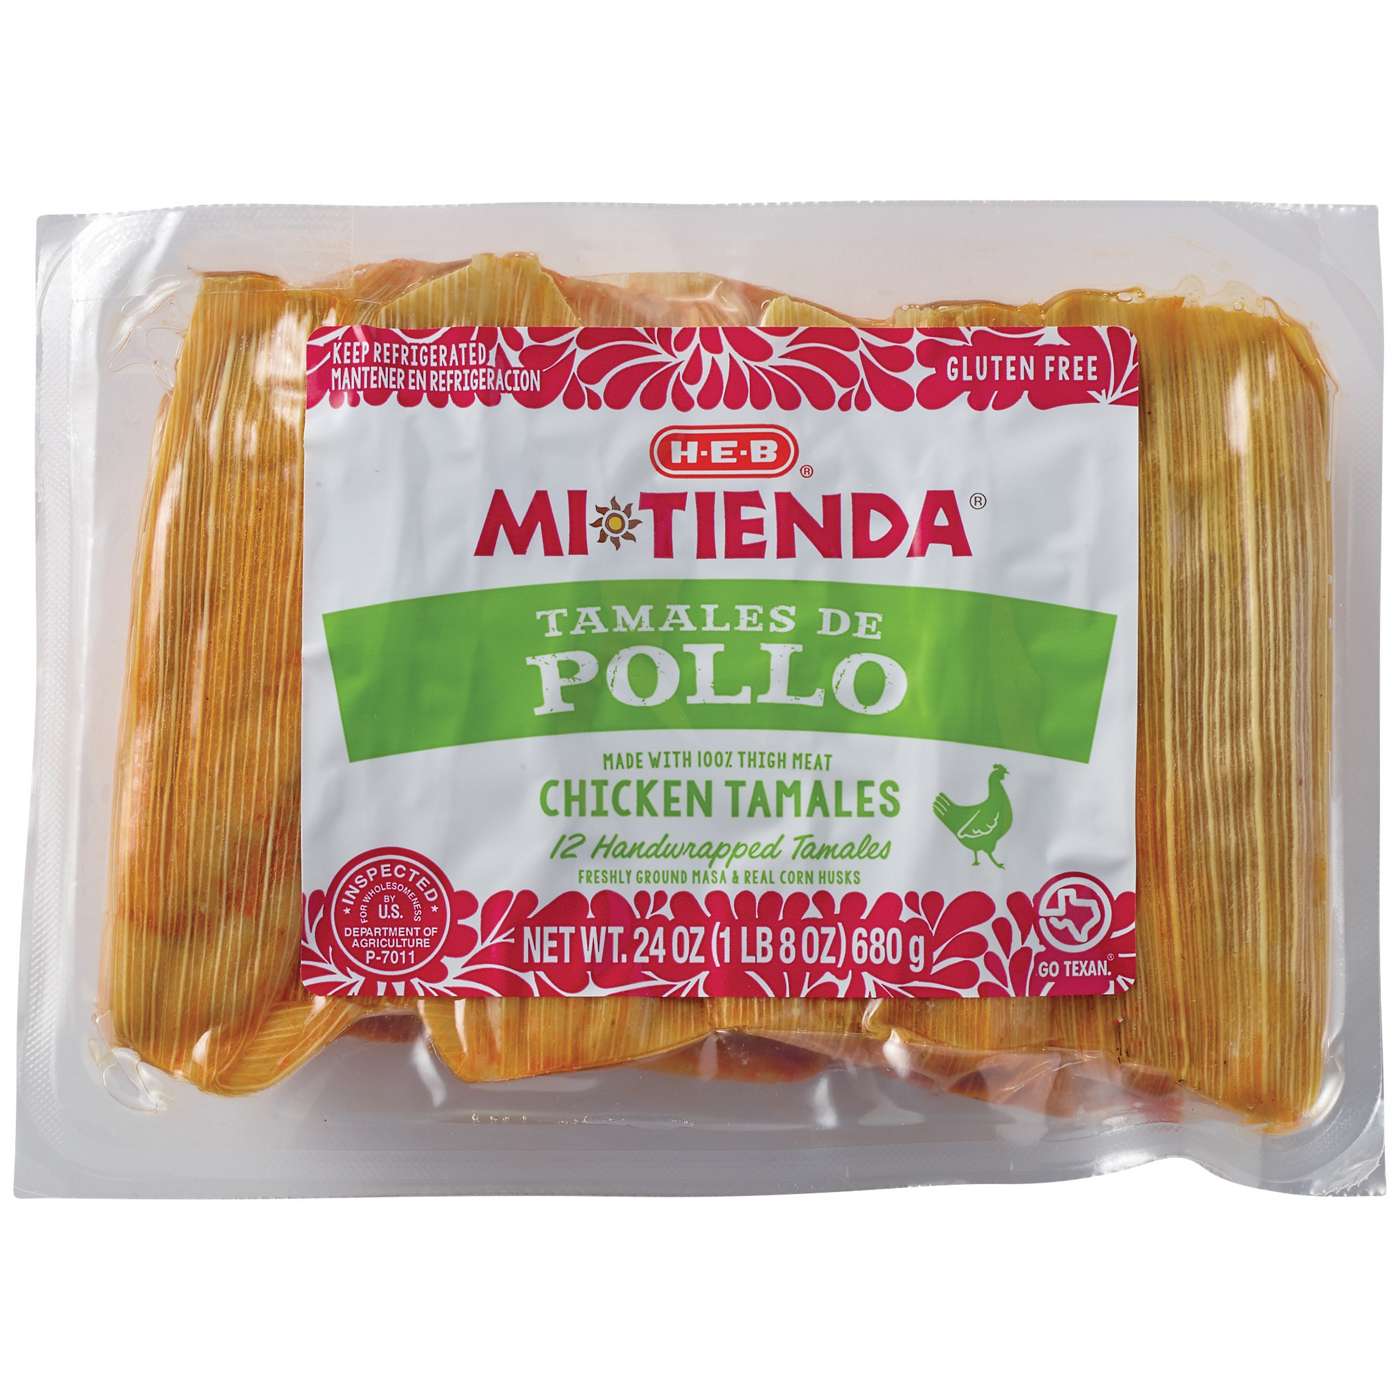 H-E-B Mi Tienda Chicken Tamales de Pollo; image 1 of 2